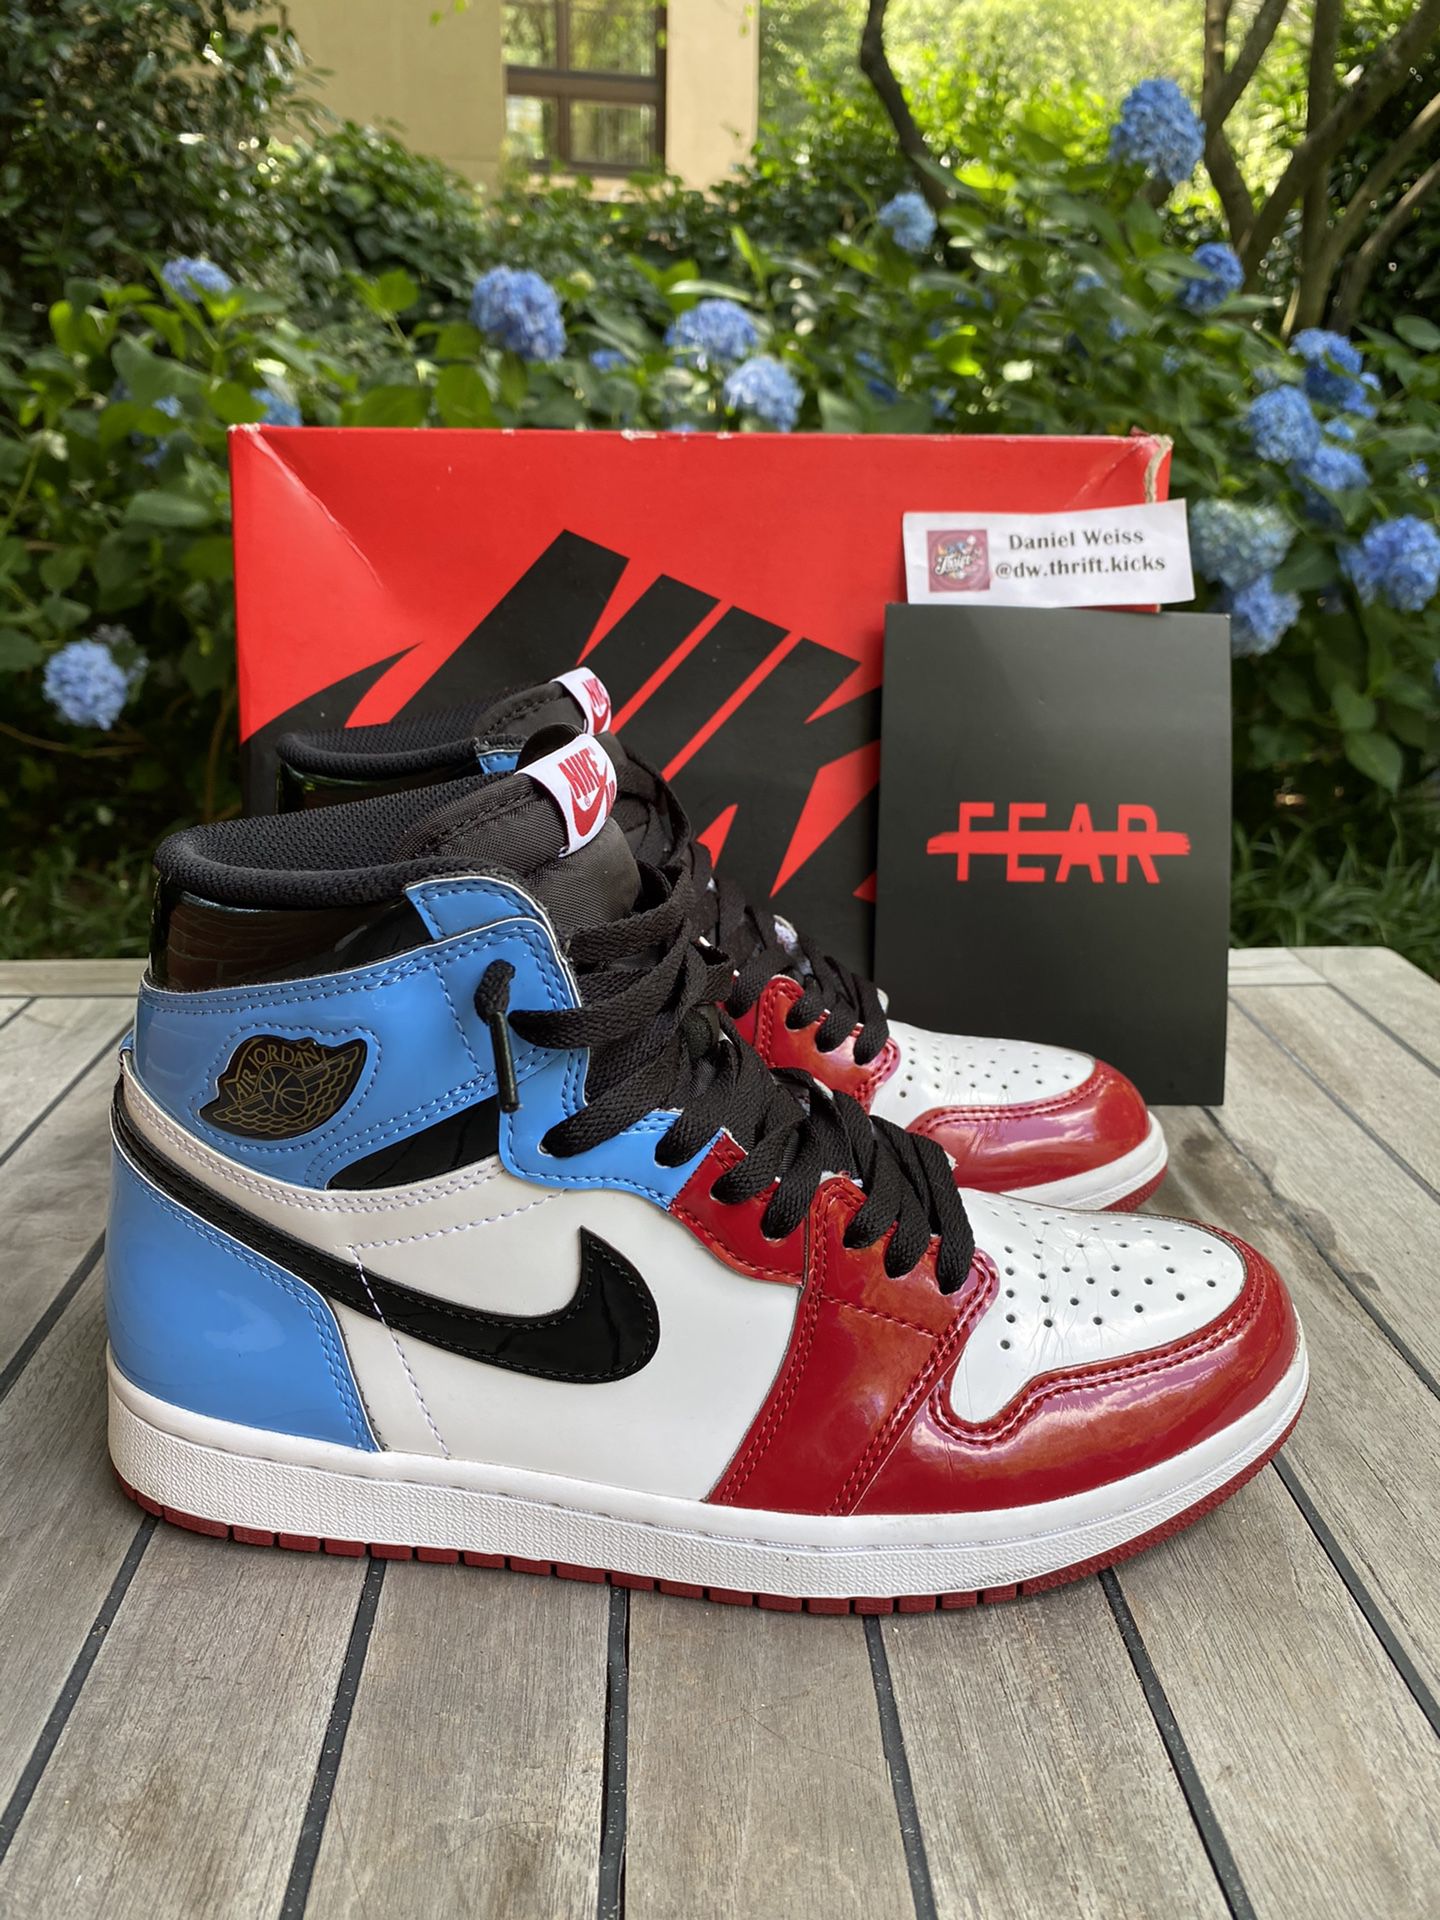 Nike Jordan 1 High Unc Chicago fearless size 8